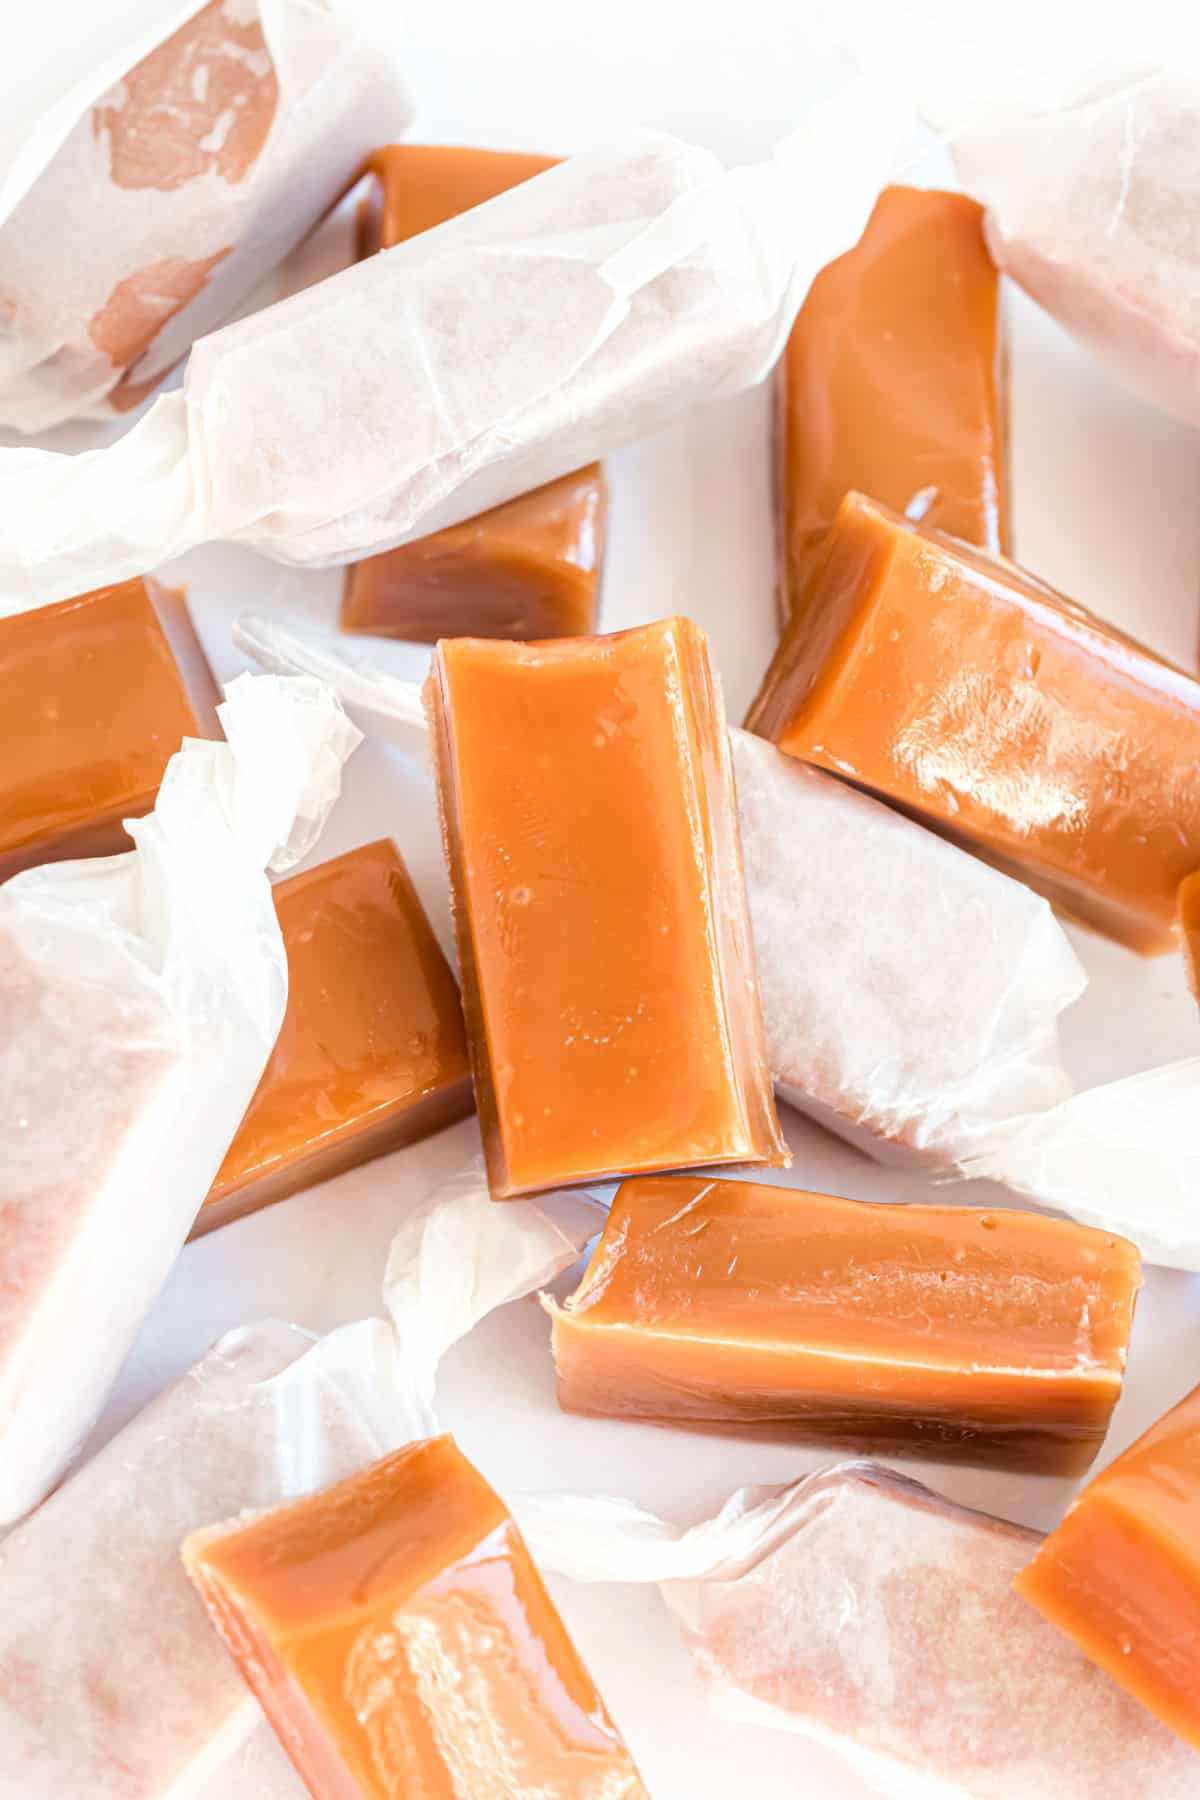 https://www.shugarysweets.com/wp-content/uploads/2022/10/homemade-caramels-wrapped.jpg